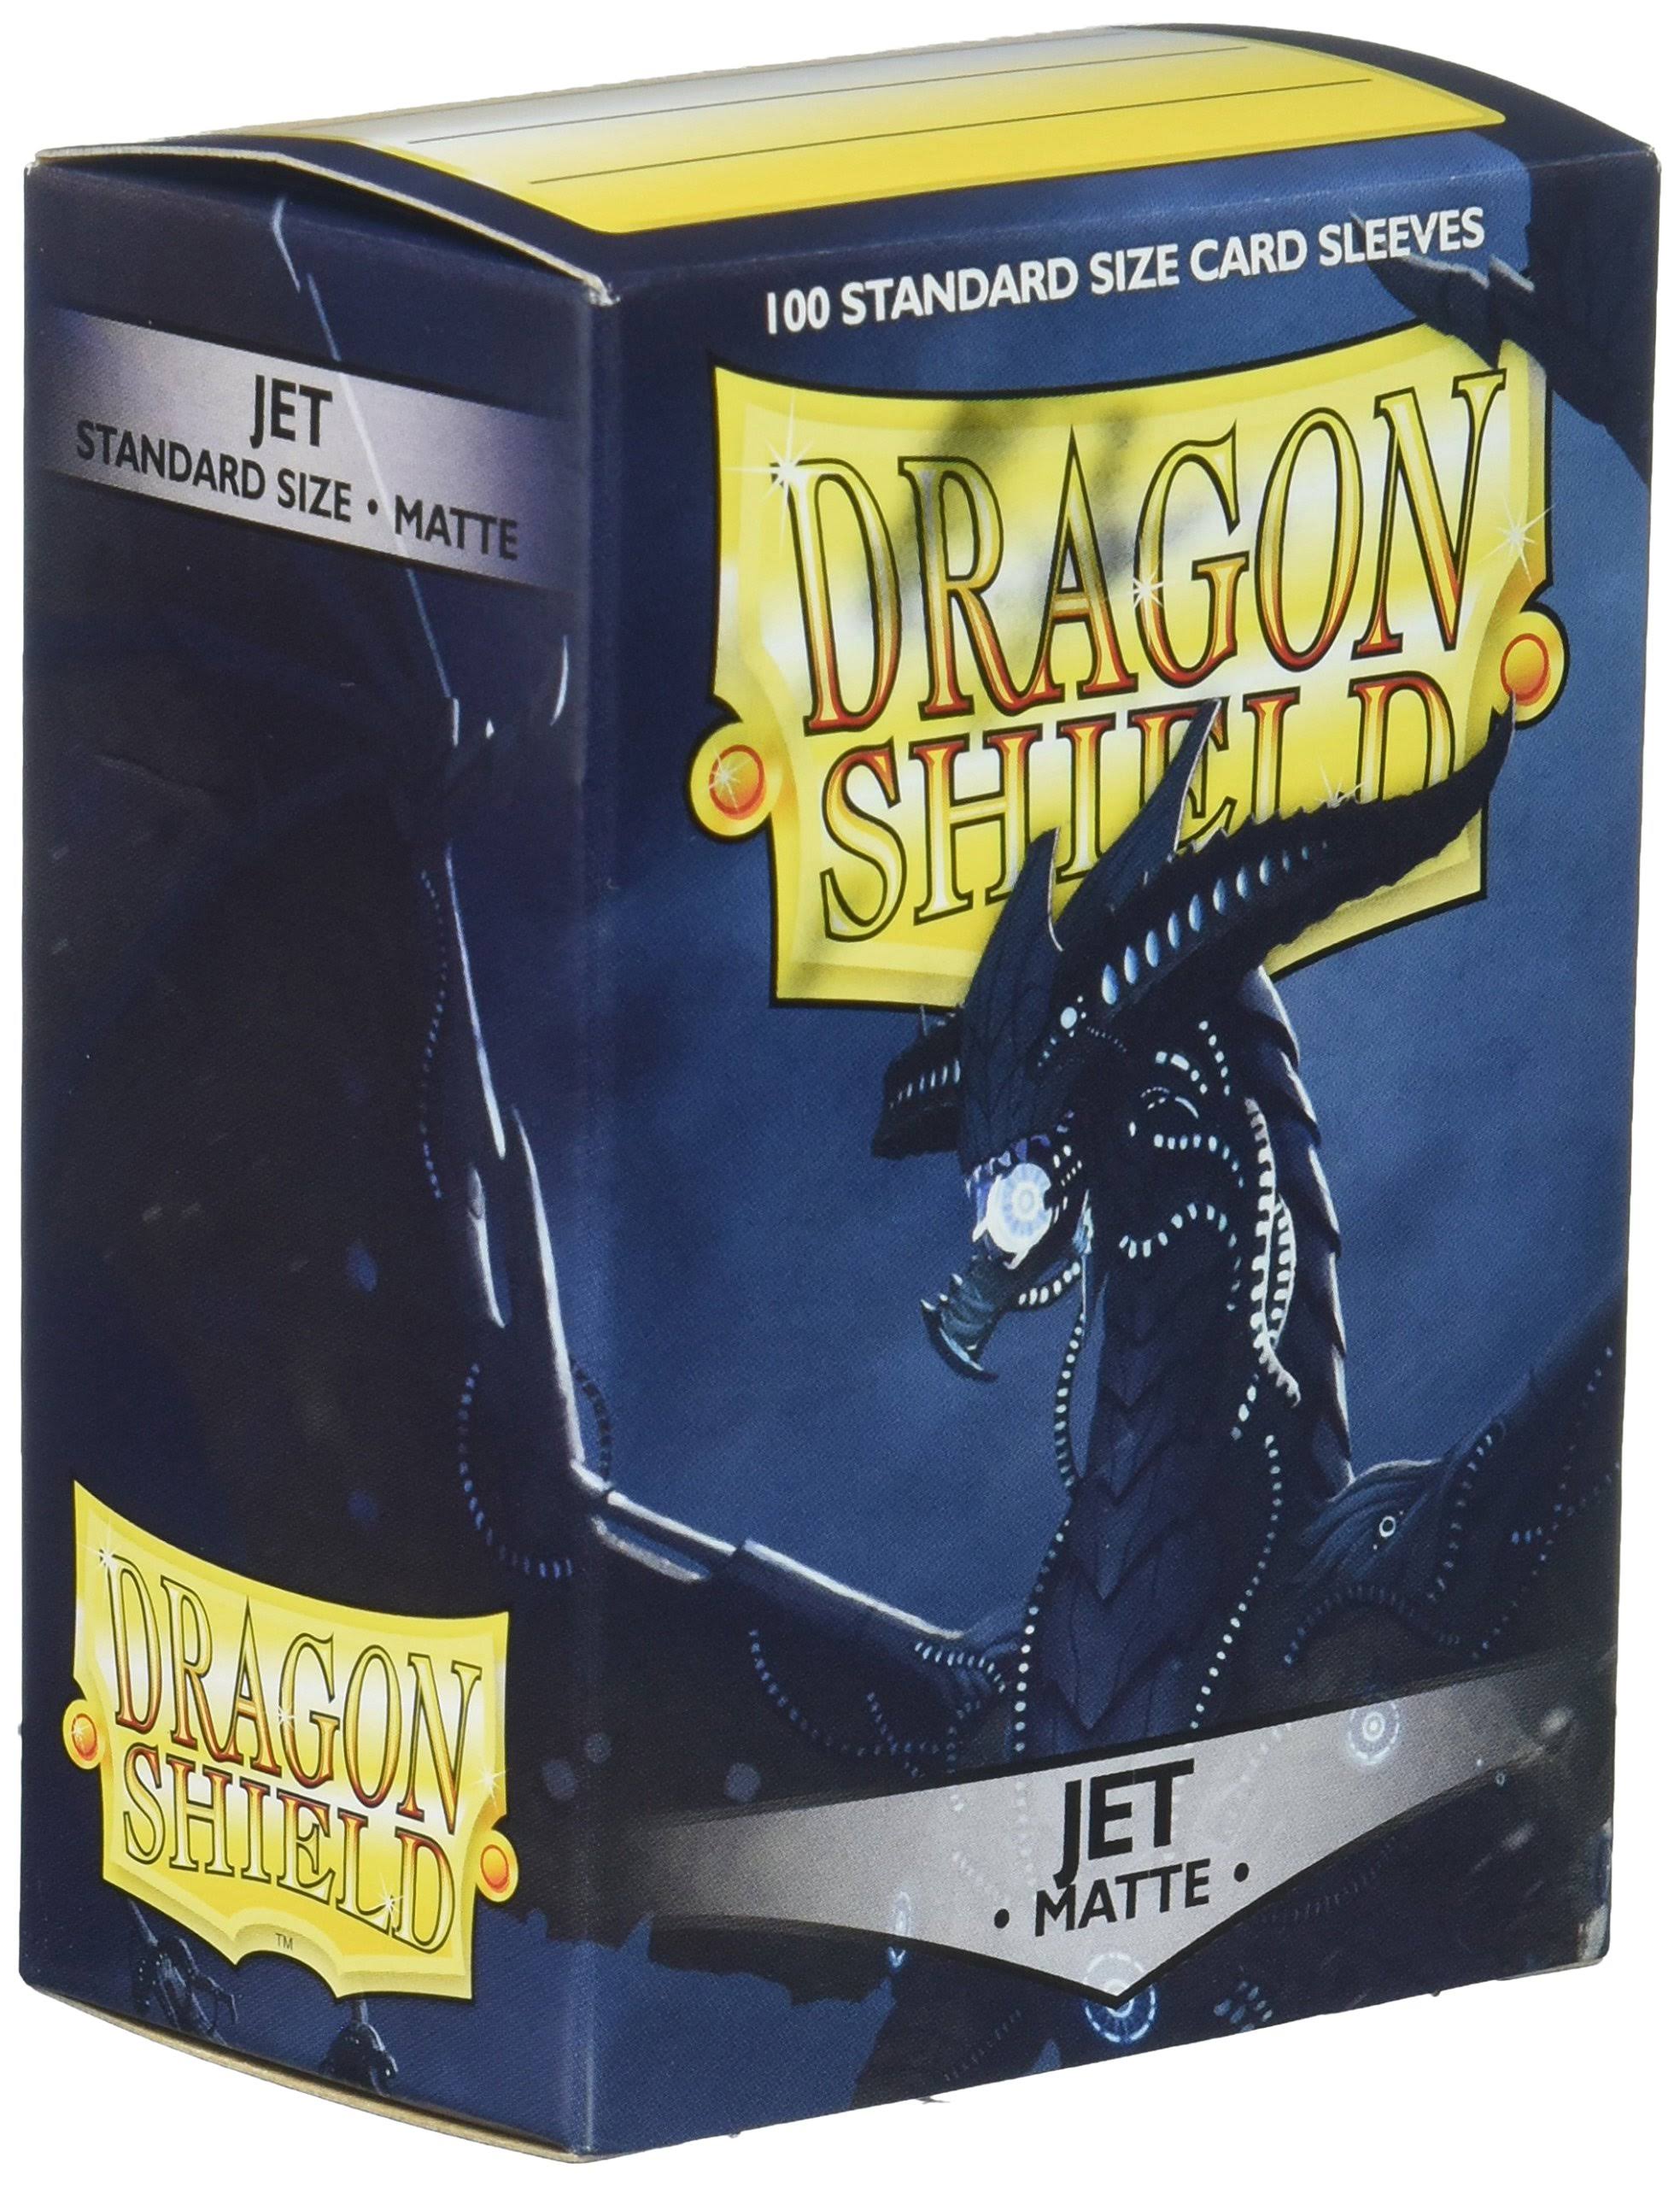 Dragon Shield Standard Sleeves - Jet Matte, 100 Standard Size Card Sleeves